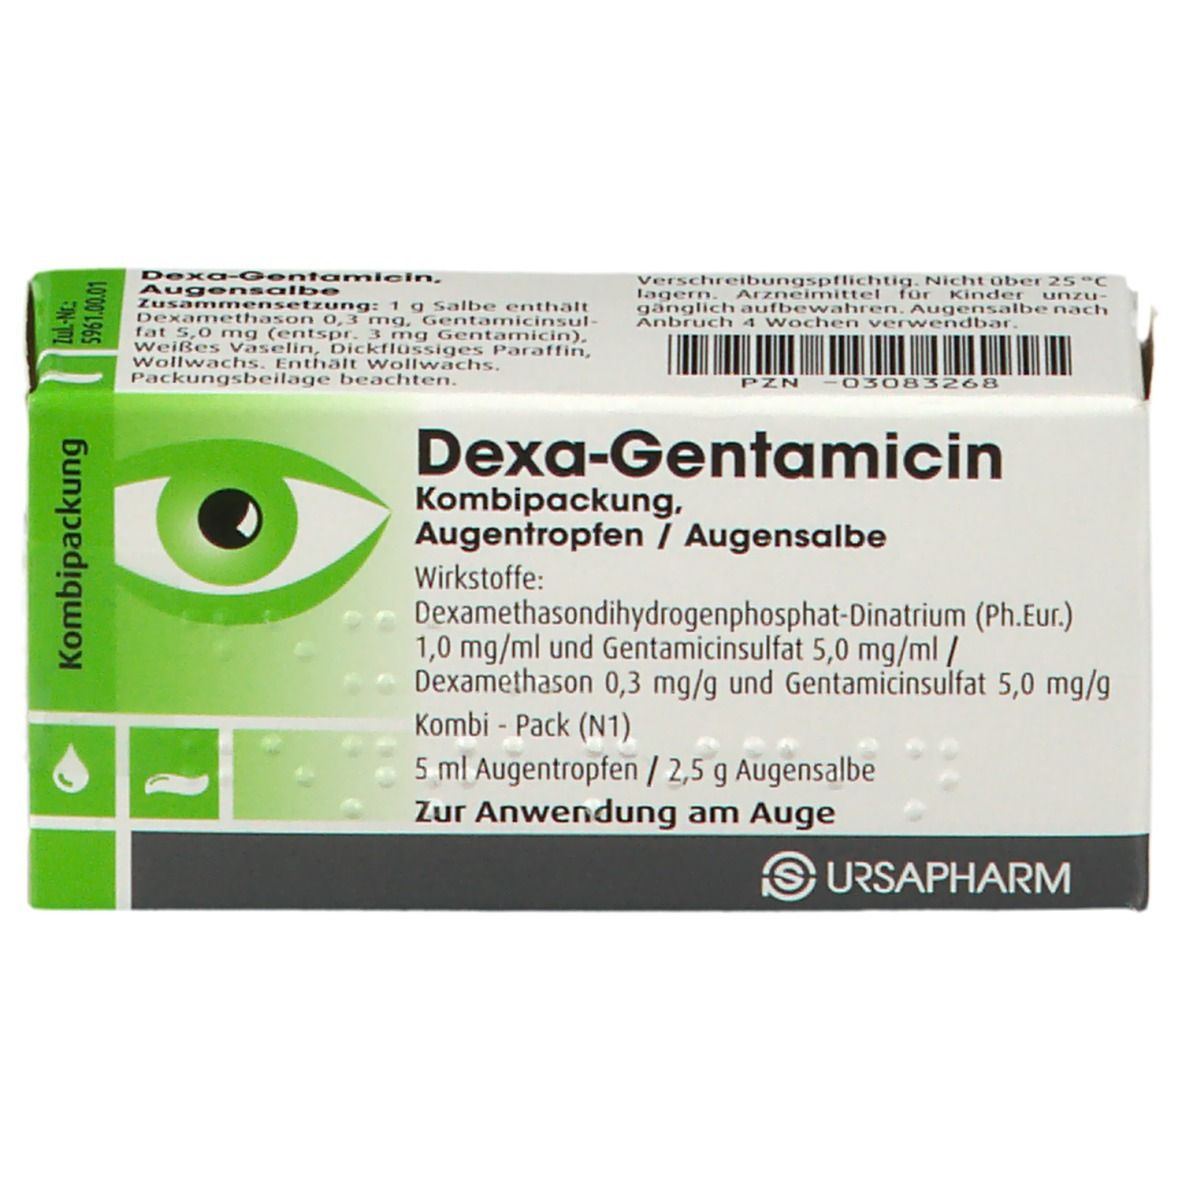 Dexa-Gentamicin Kombipackung AUgentropfen + Augensalbe